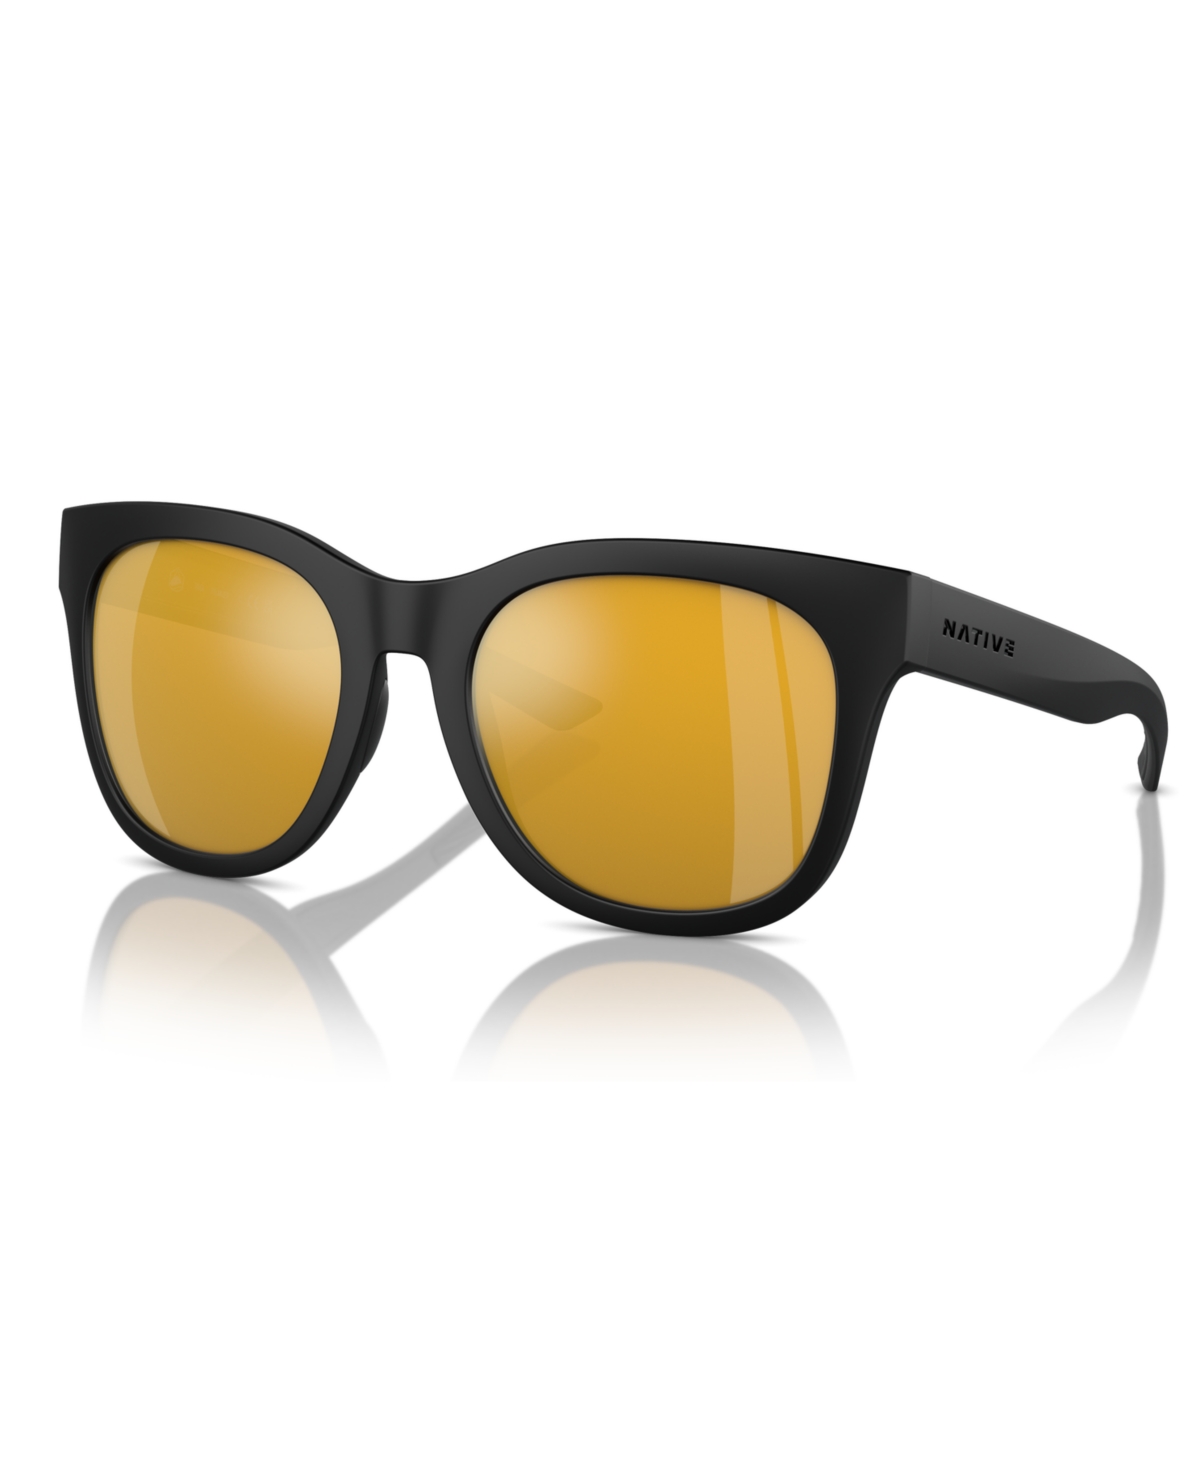 Women's Polarized Sunglasses, Tiaga Xd9044 - Matte Black, Bronze Reflex Polarized